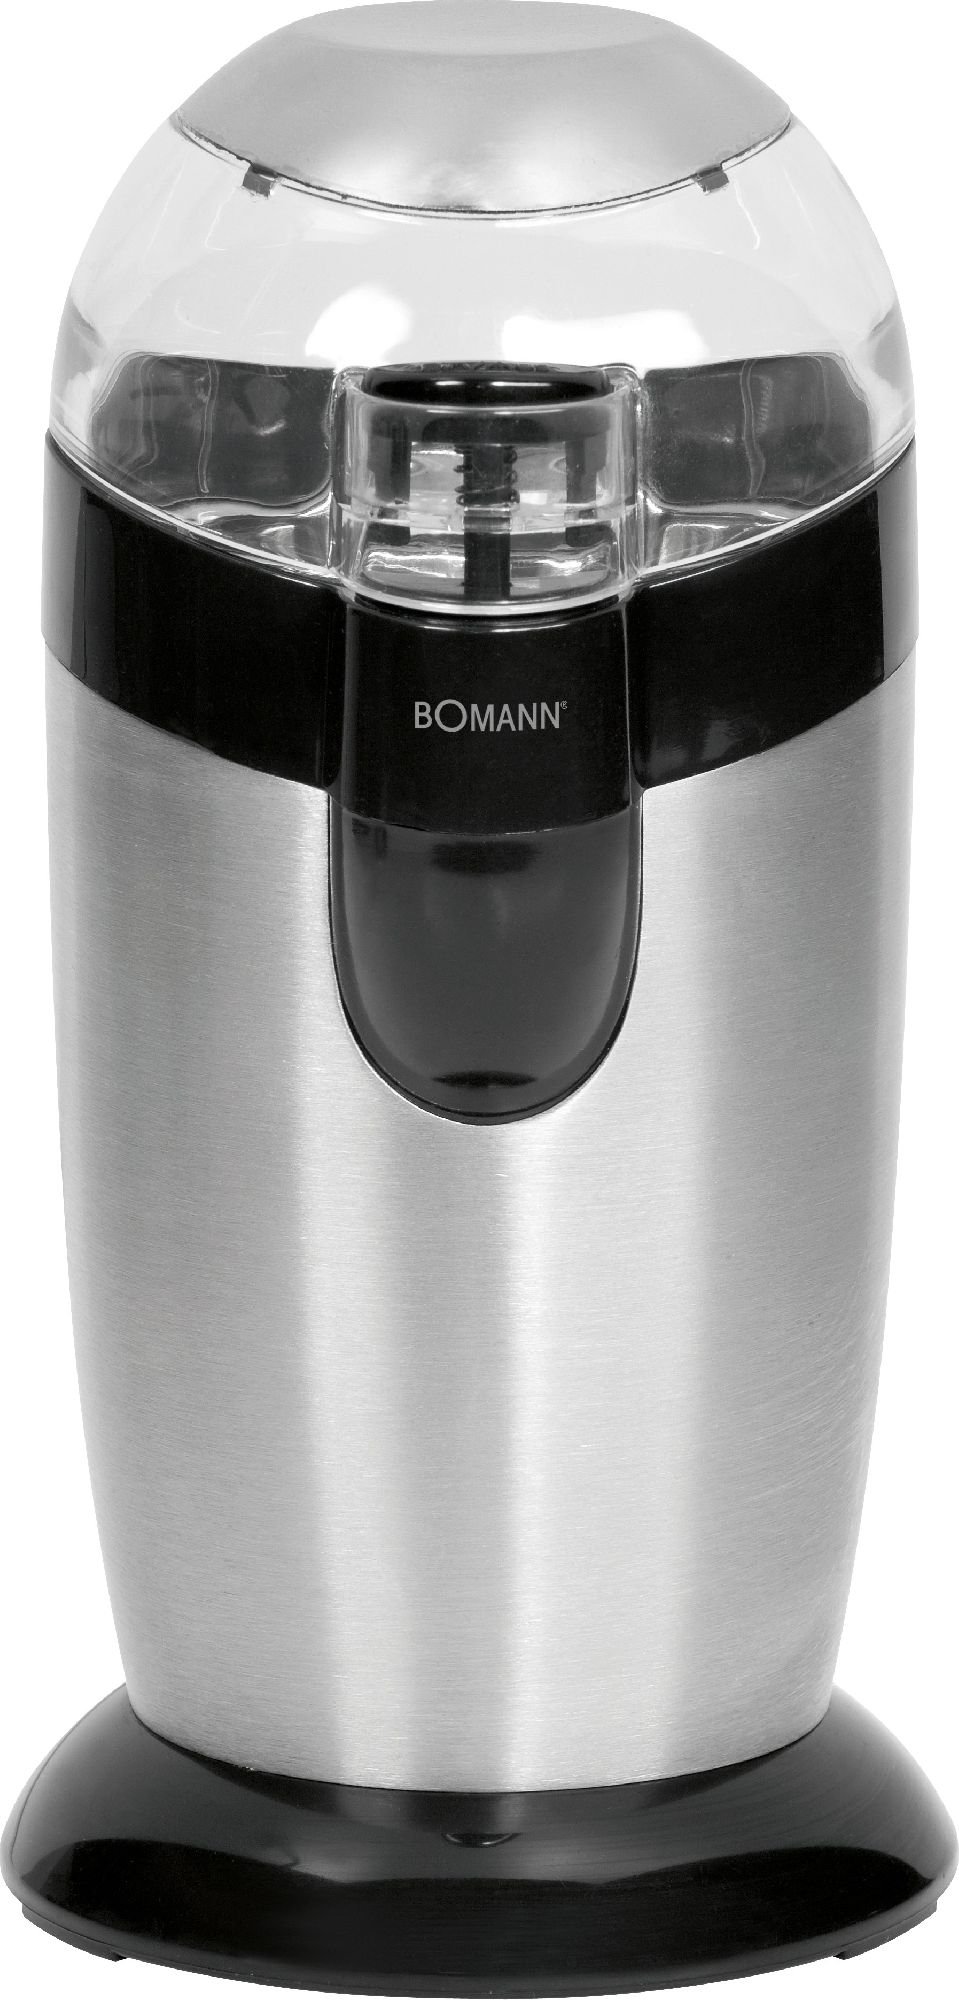 Rasnite - Rasnita de cafea electrica, Bomann, Inox, 120 W, 40 g, Negru/Argintiu